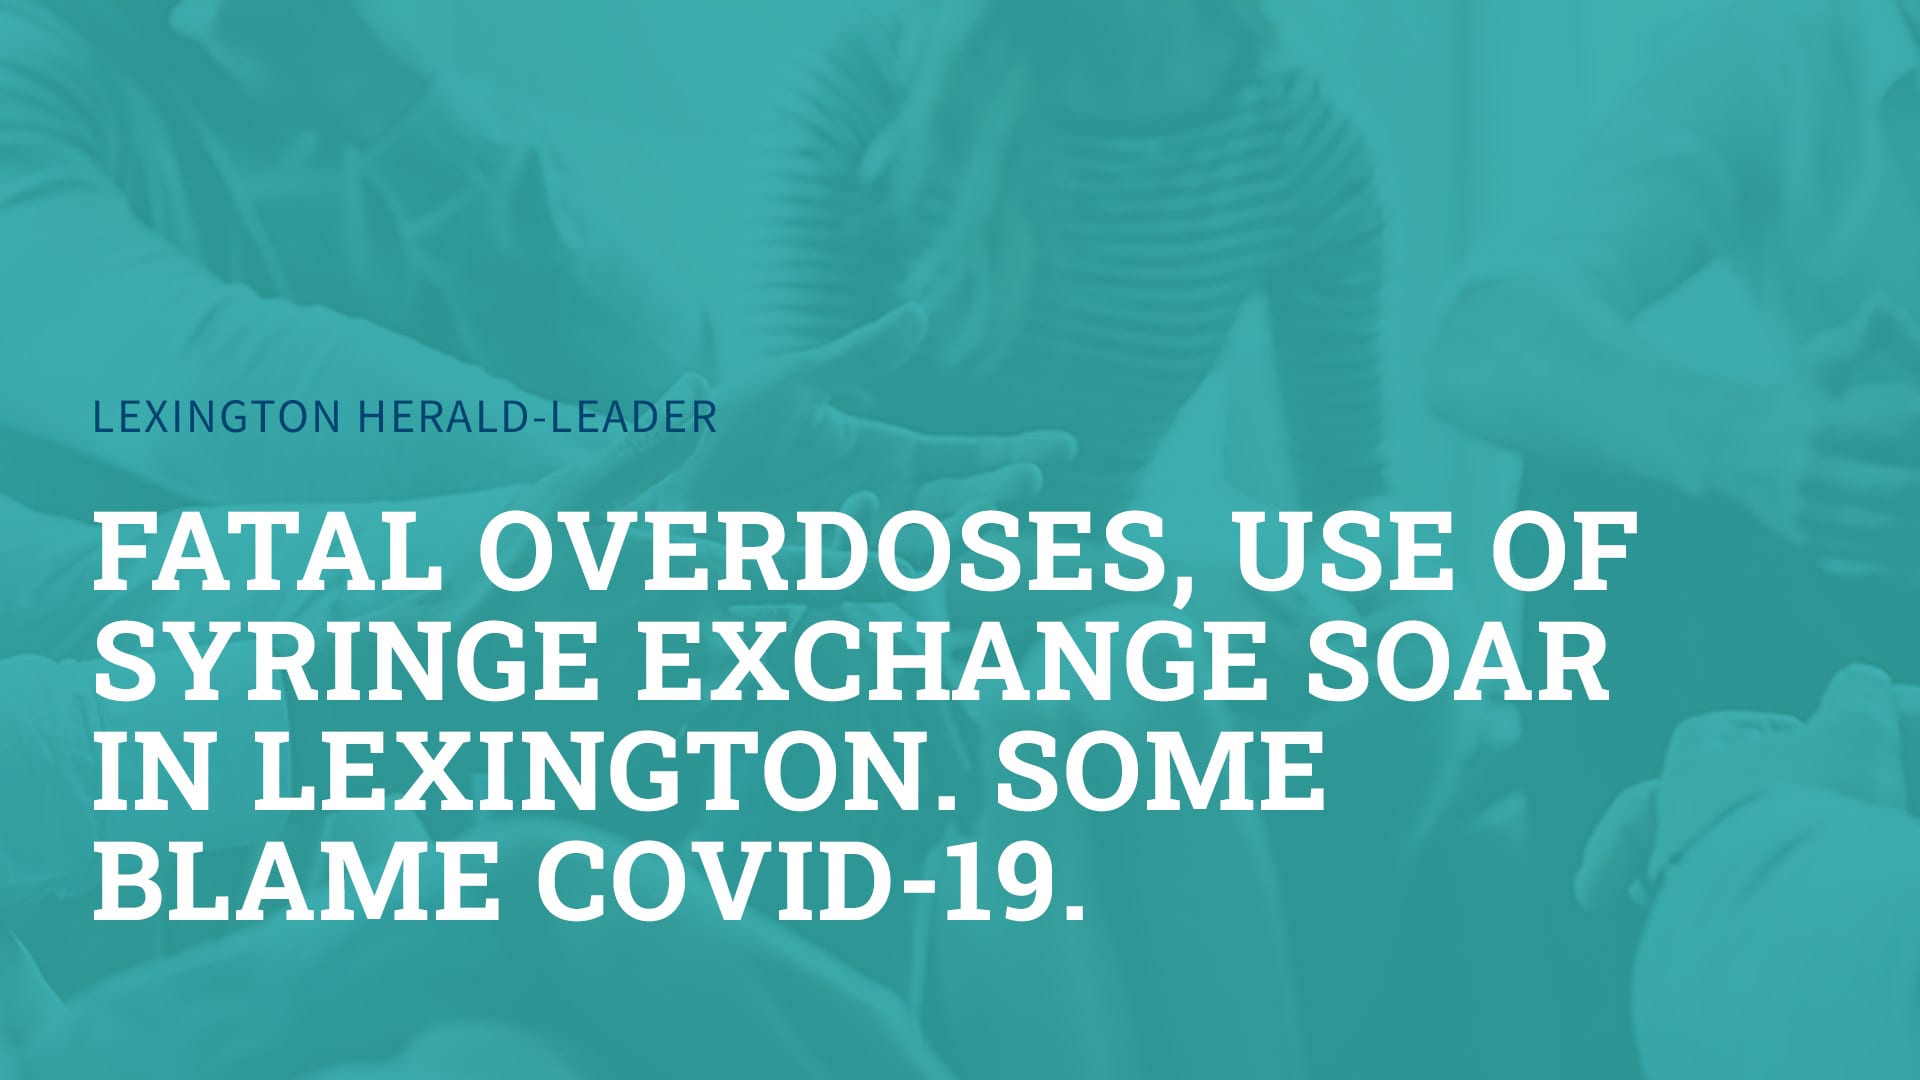 Fatal overdoses, use of syringe exchange soar in Lexington. Some blame COVID-19.